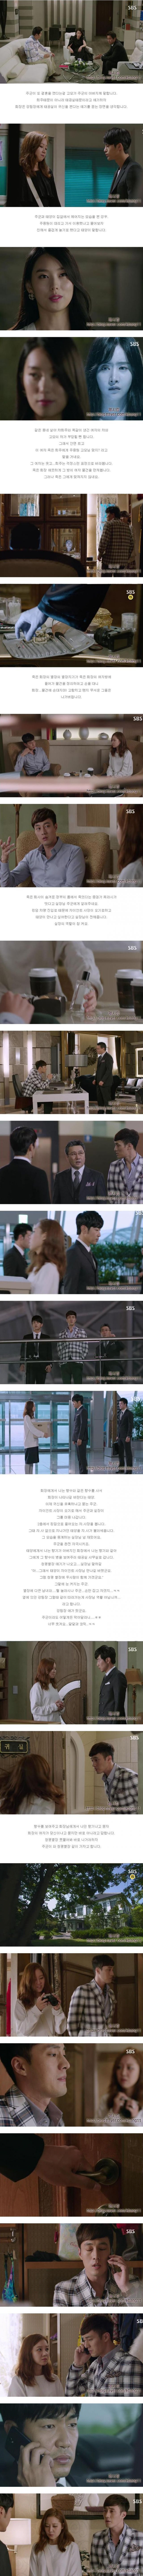 episode 11 captures for the Korean drama 'Master's Sun'